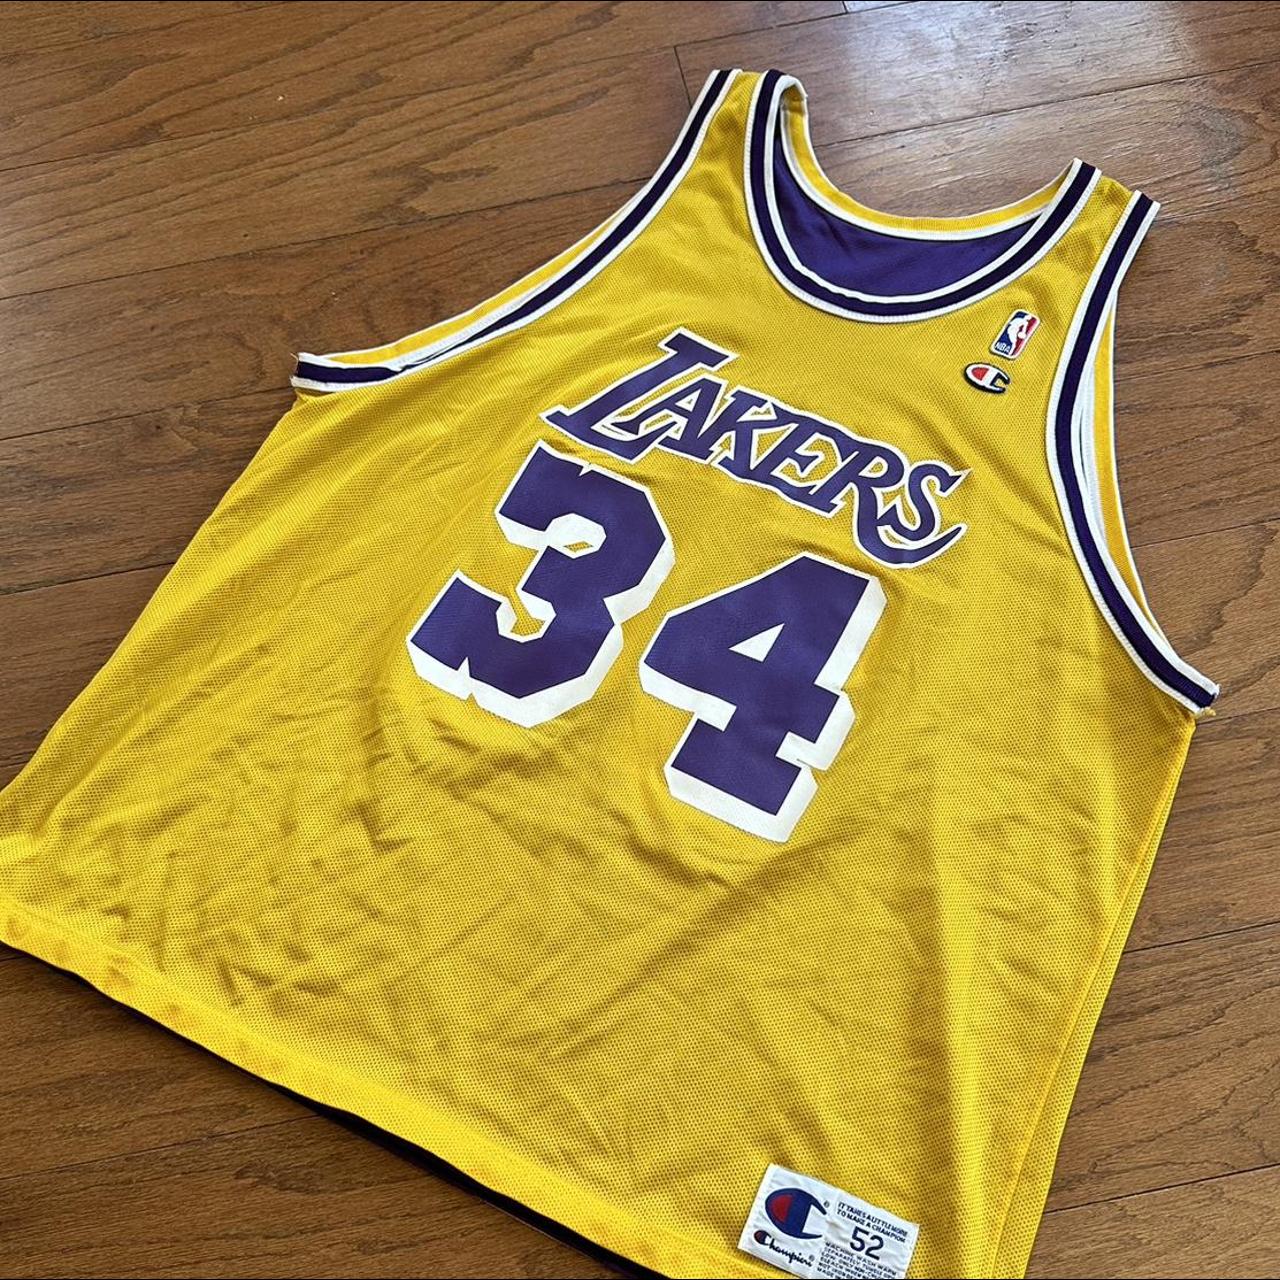 Vintage Lakers jersey - Depop